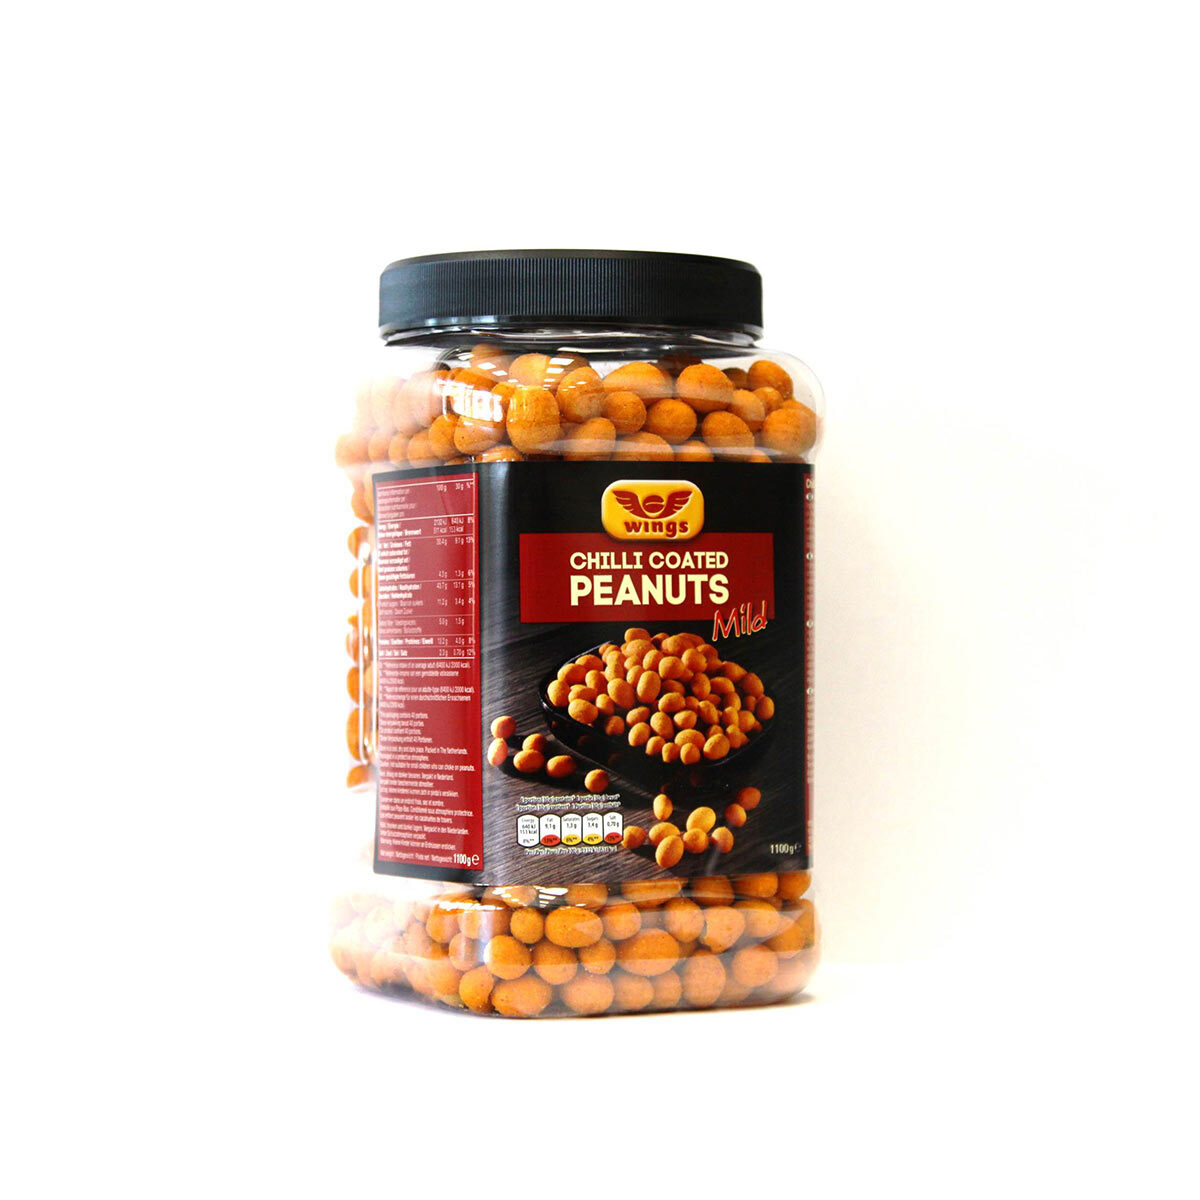 Peanut or PB 💯, costco uk